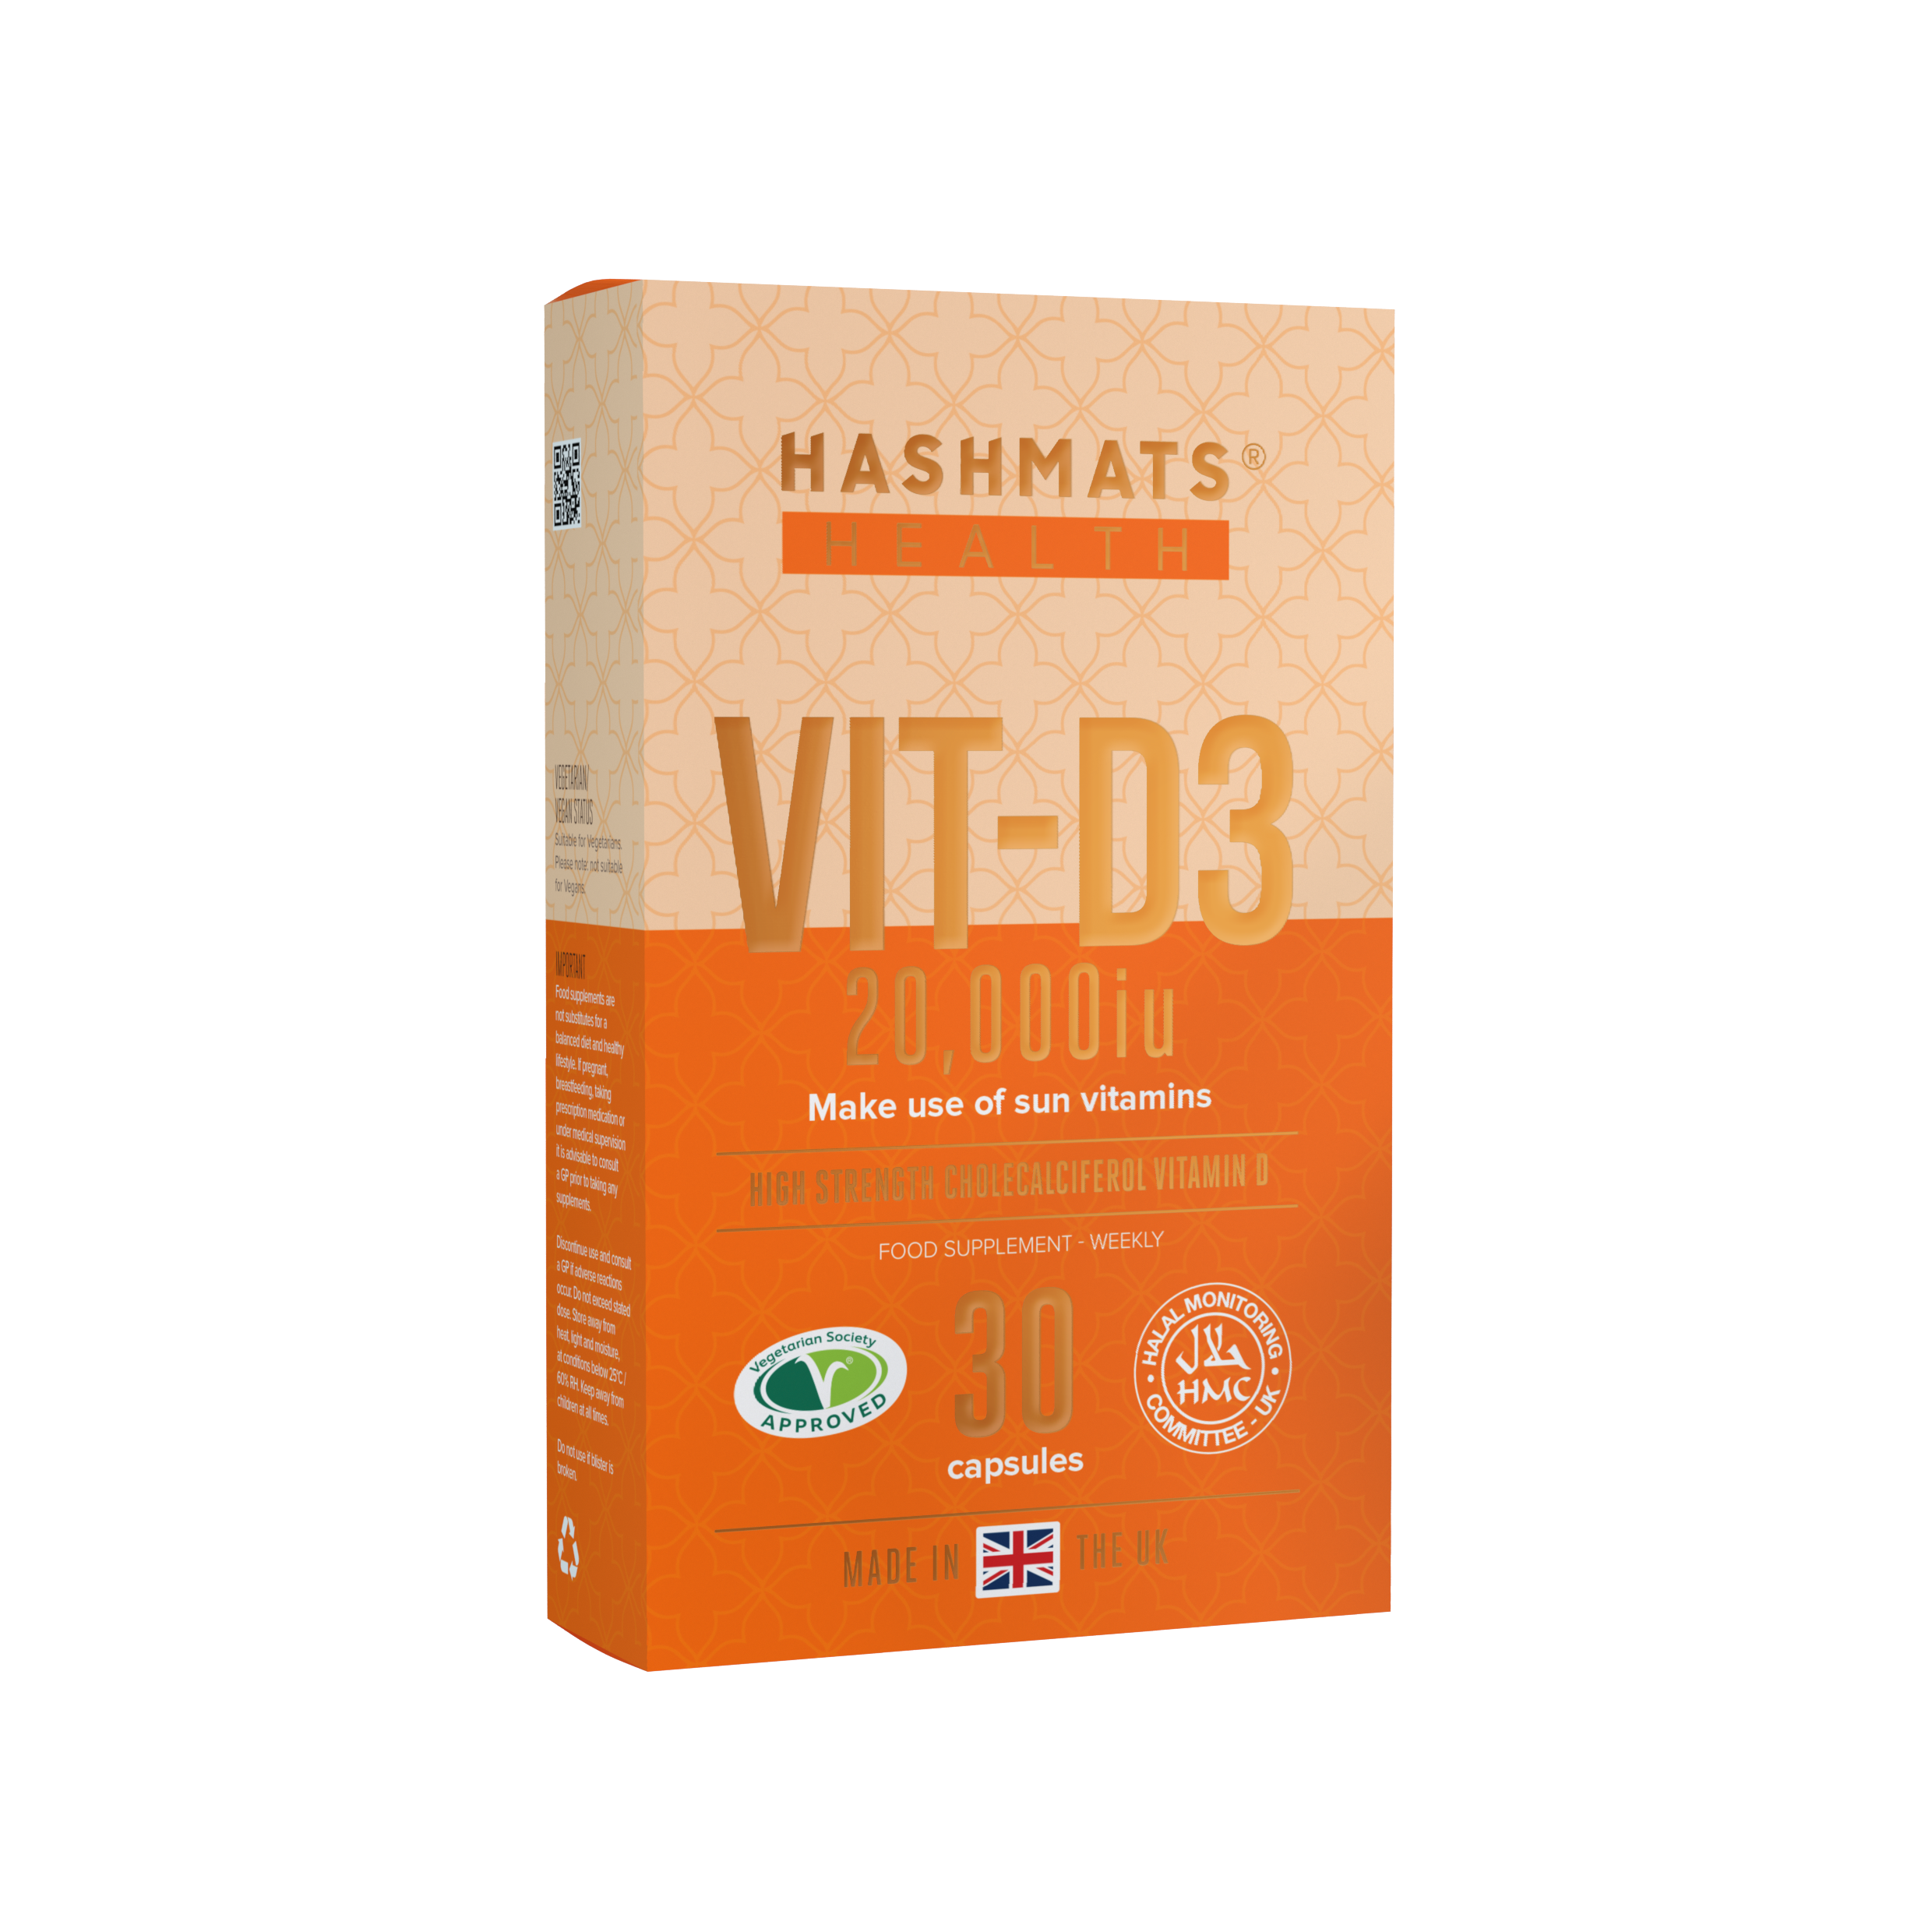 Vitamin D 20000iu - Vit-D3 by HASHMATS®